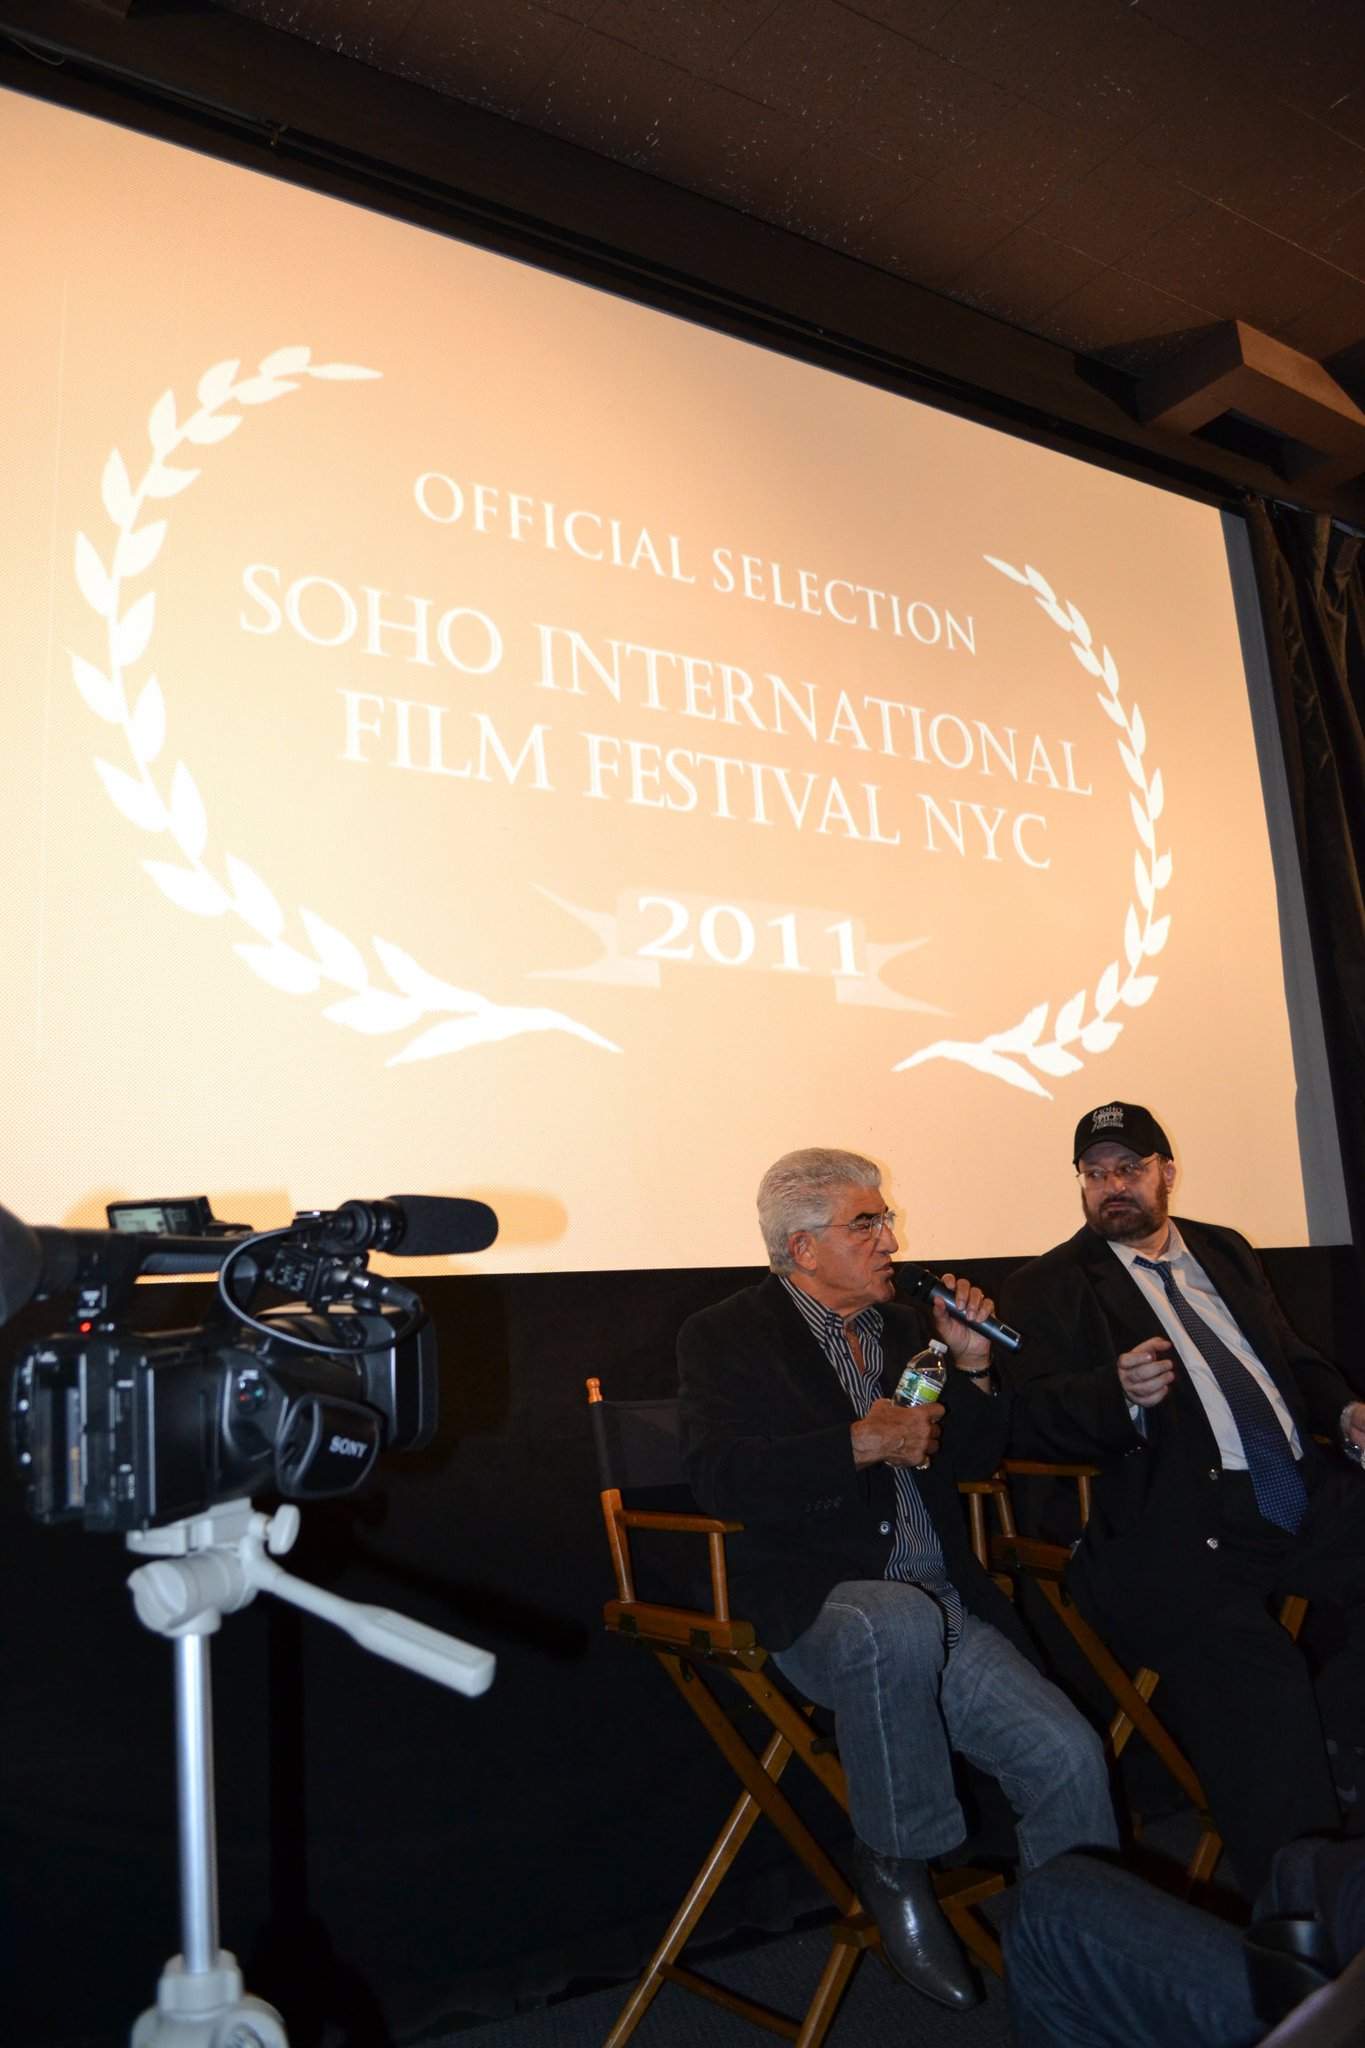 Frank Vincent and John Gallagher at Soho International Film Festival